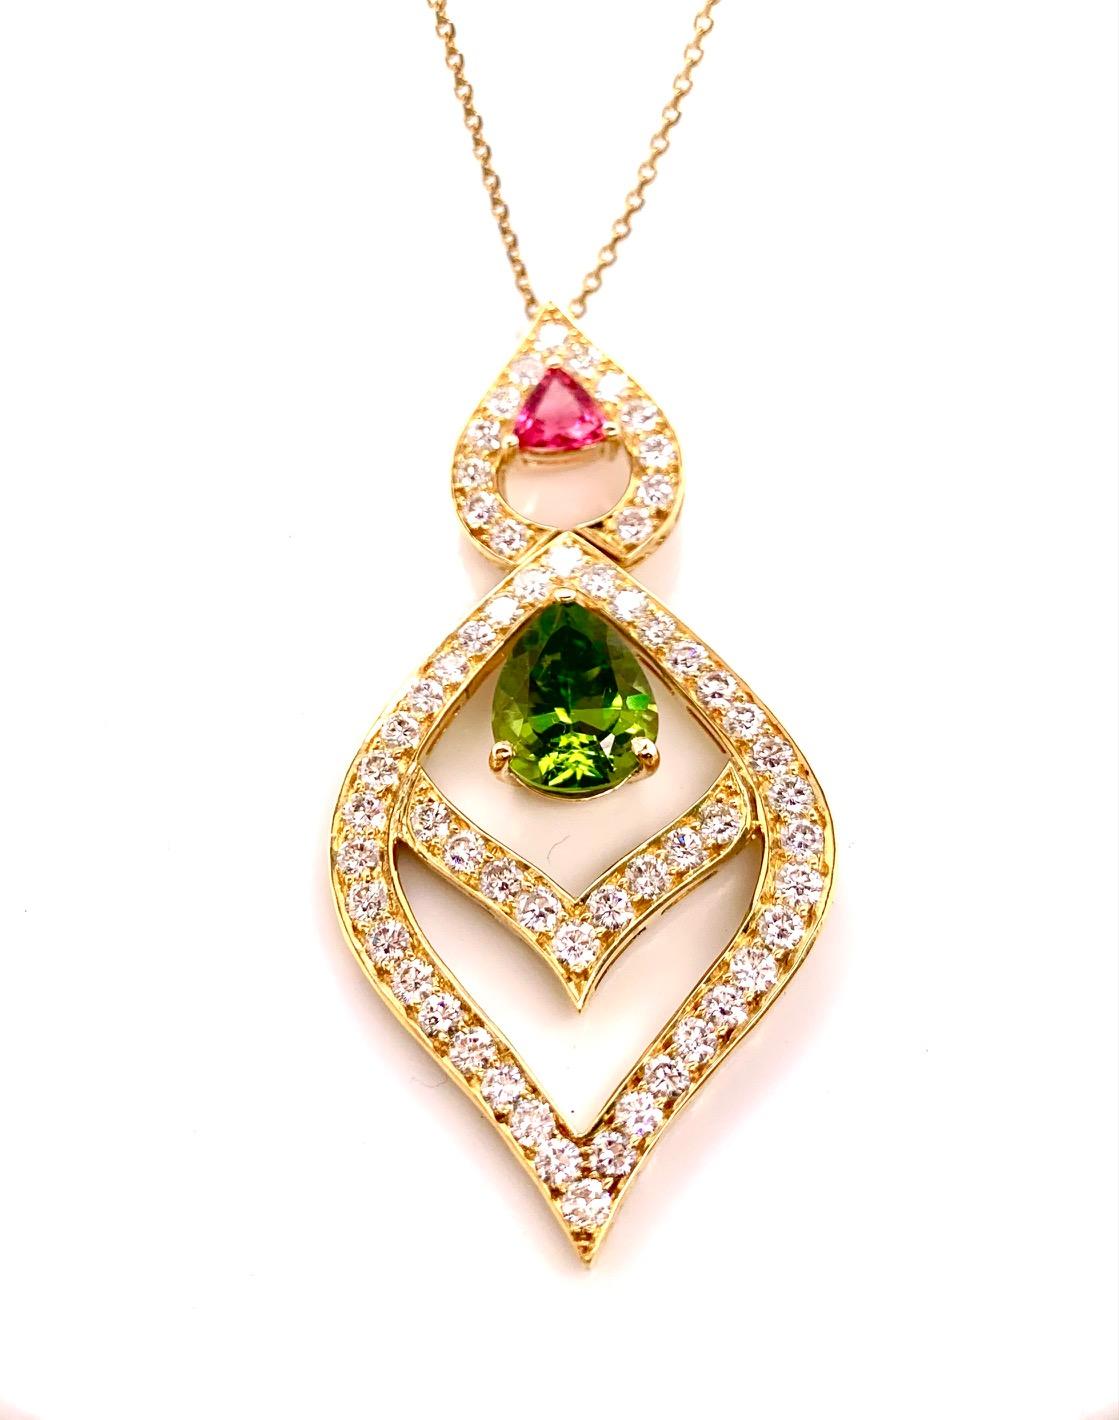 Geometric Lantern Style Period and Pink Tourmaline Necklace

Pear Shape Peridot - 4.50 carat
Triangular Pink Tourmaline - 0.75 carat
Side Diamond Color -F/G
Clarity - VS 
Side Diamonds -3.45 carat 
Side Diamond Shape - Round 
Weight - 17 grams